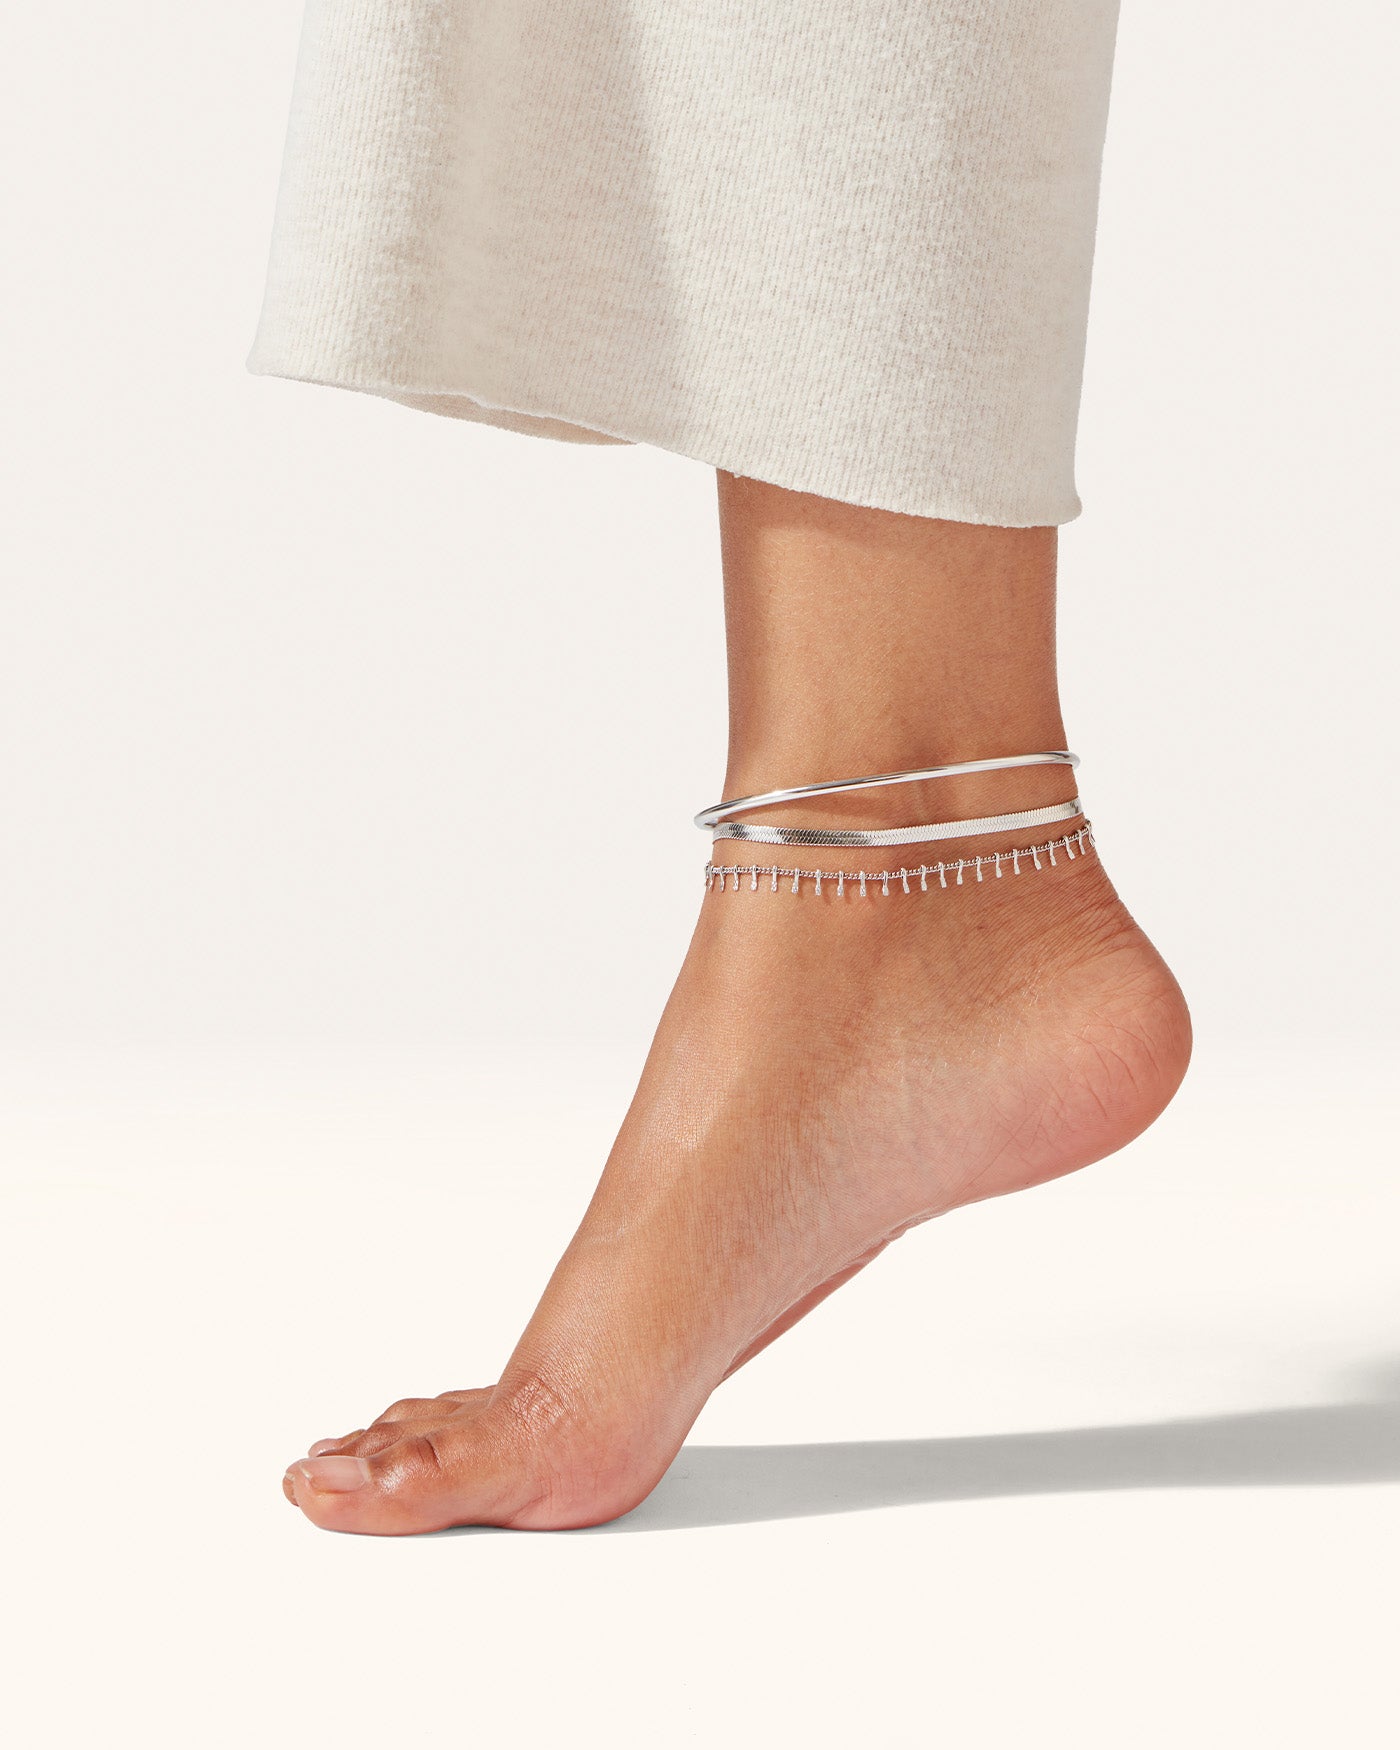 The Modern Anklet Stack